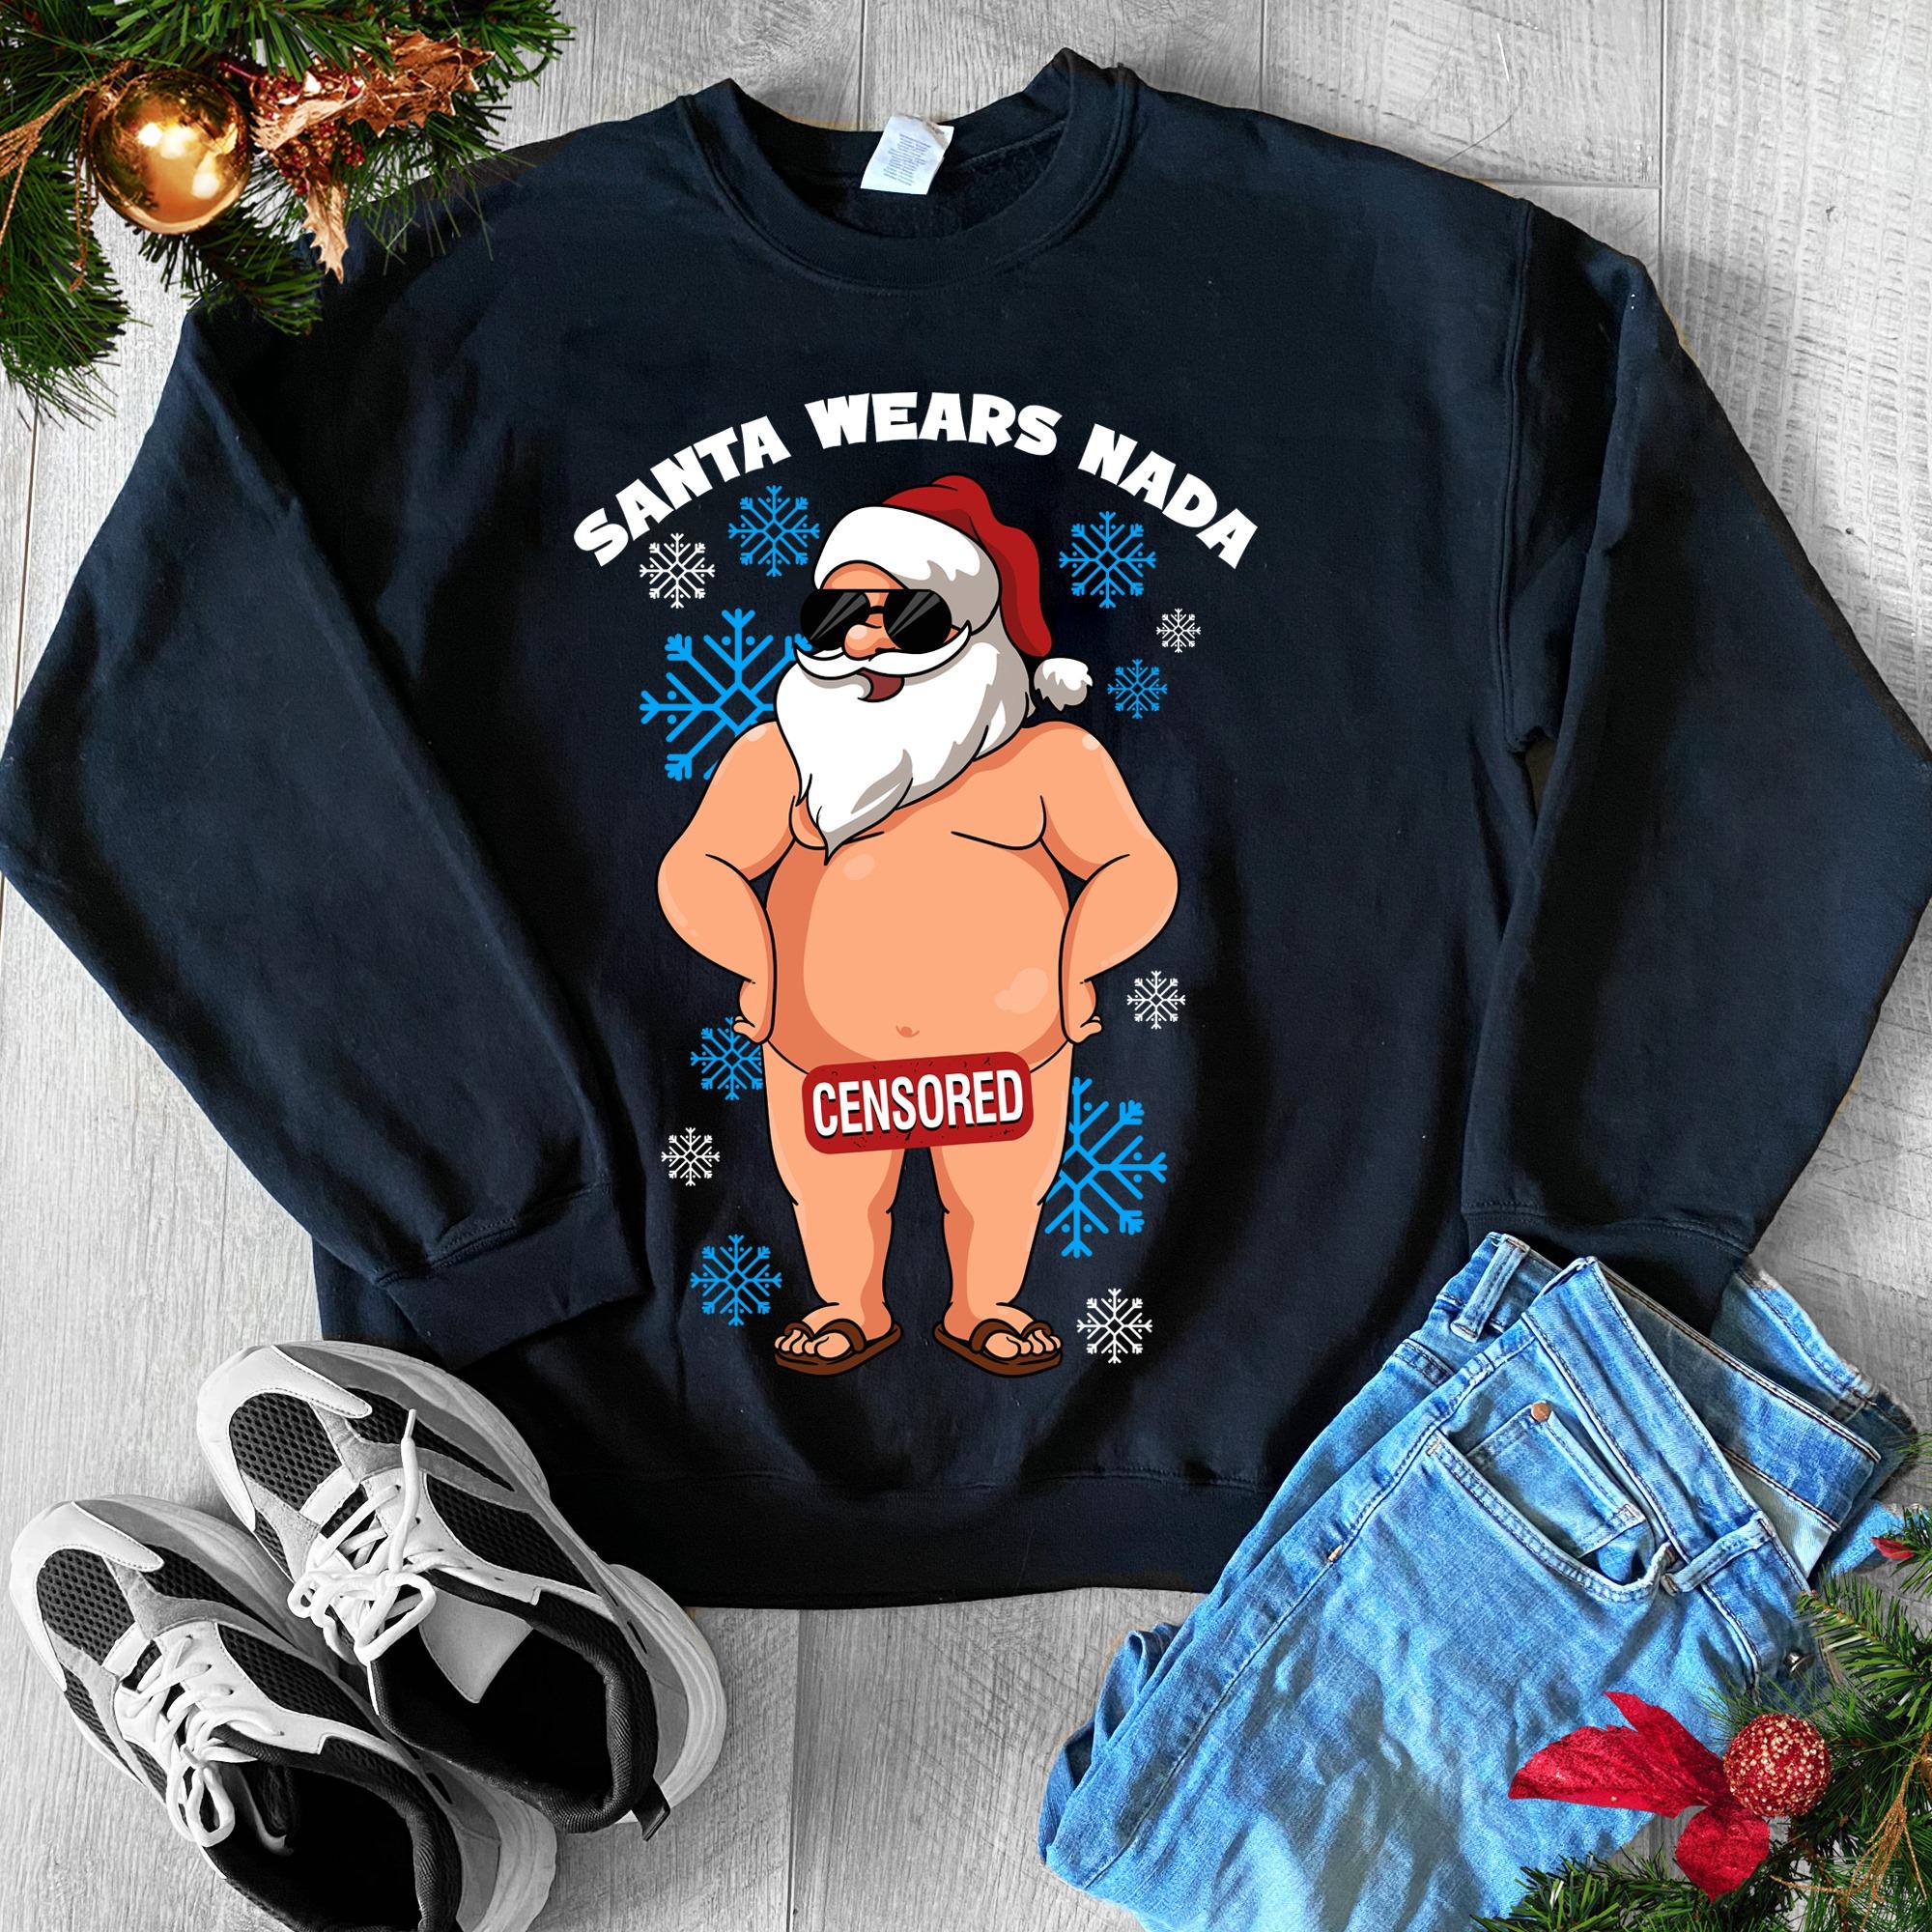 Santa Claus Nude, Christmas Funny Santa - Santa Wears Nada